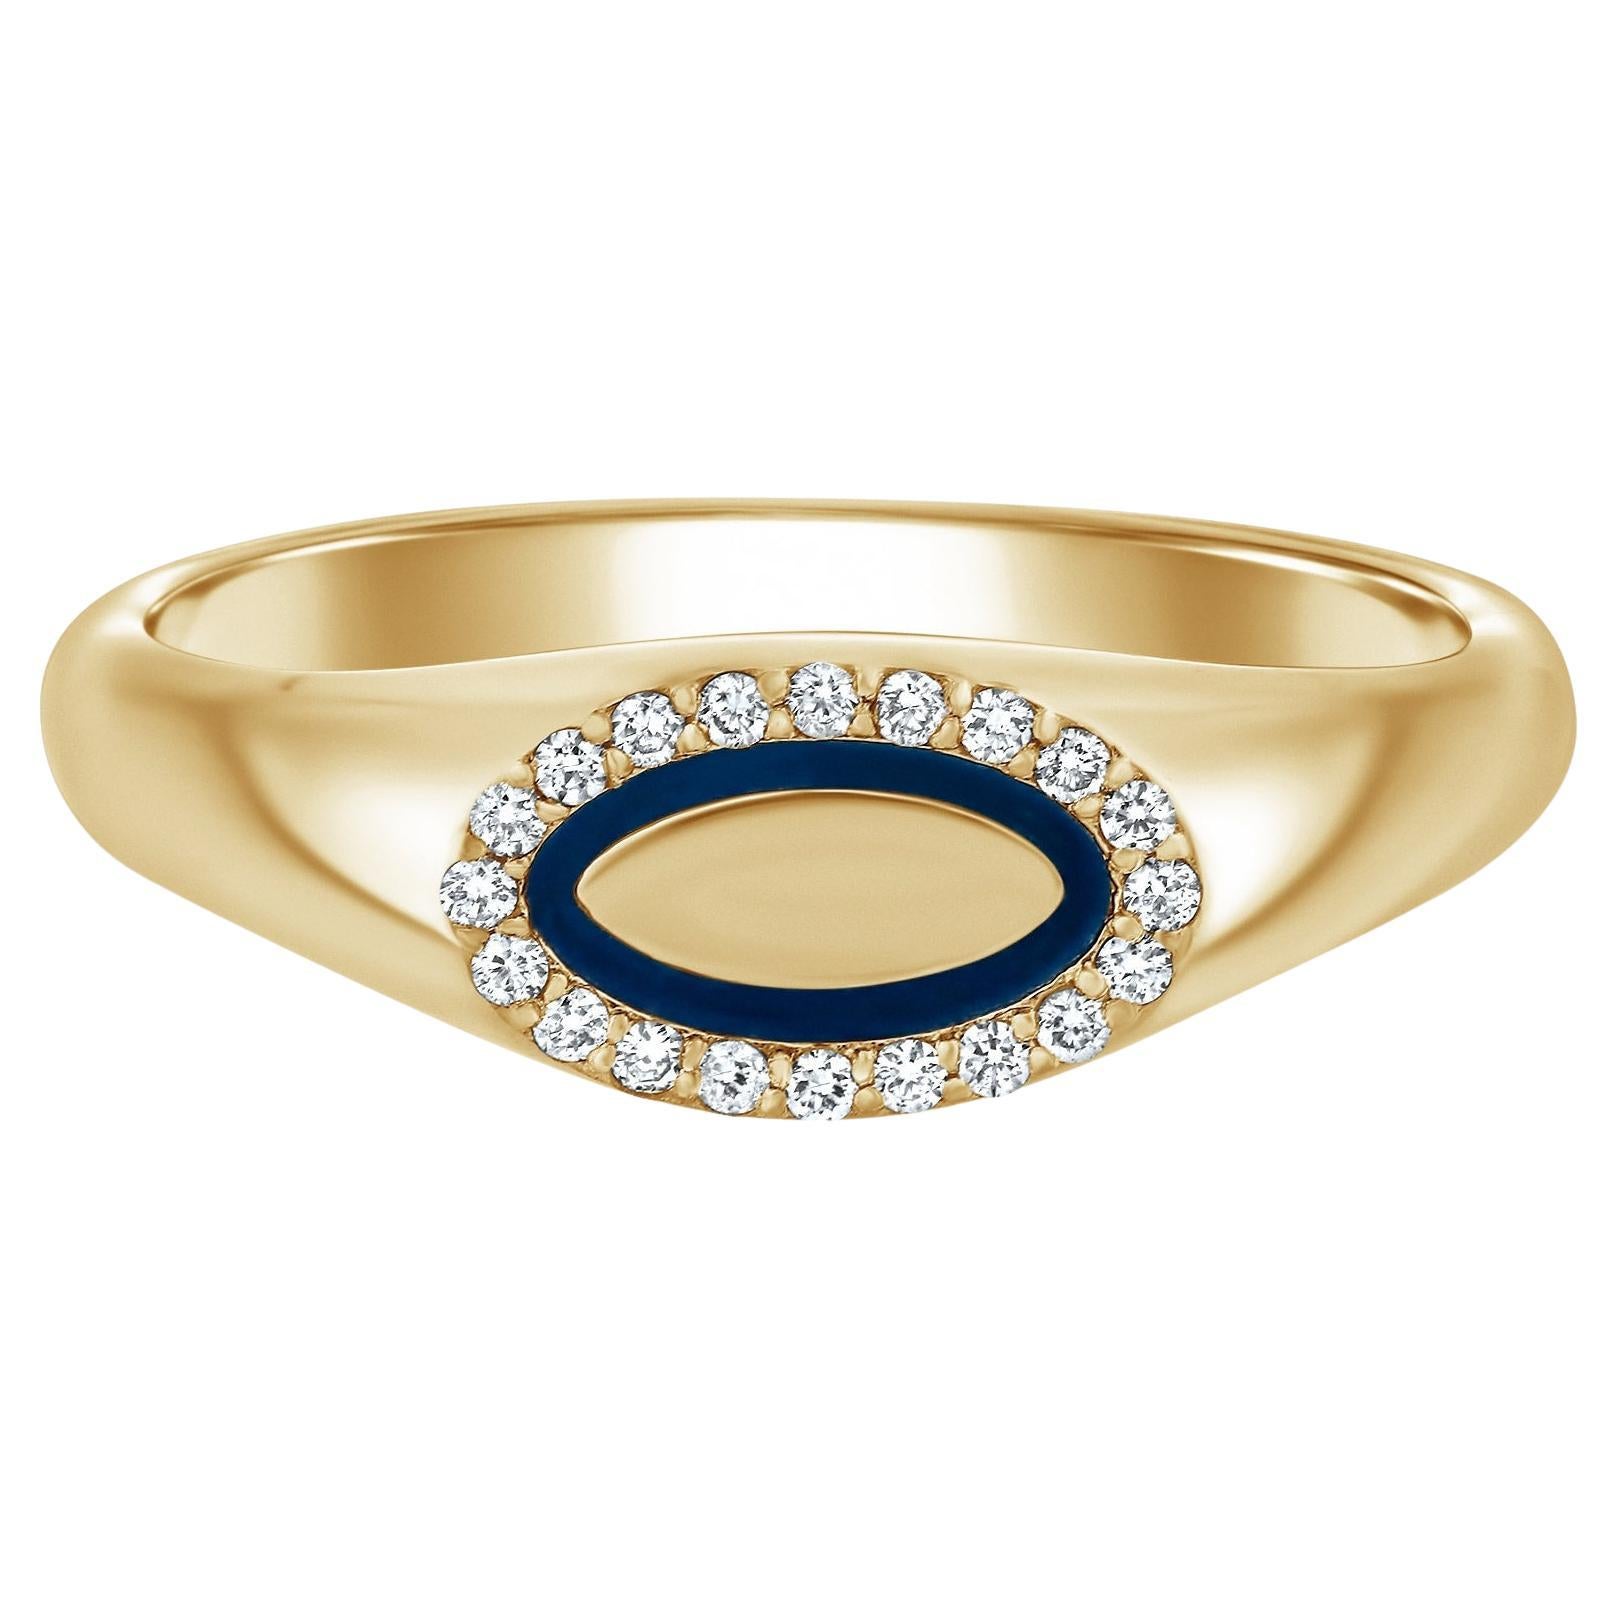 Powerful Men's 14K Yellow Gold Diamond and Enamel Signet Ring by Shlomit Rogel